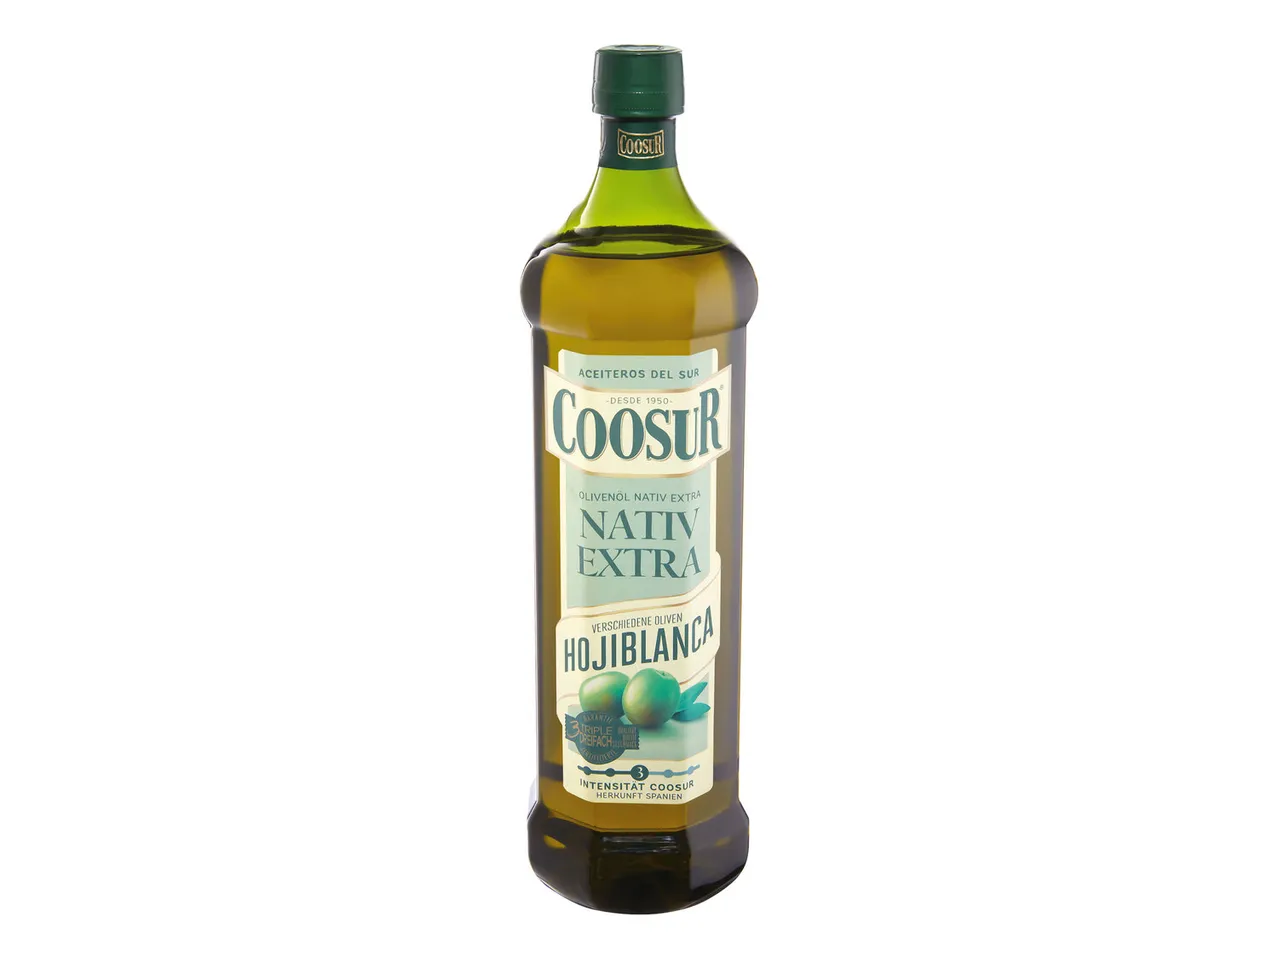 Coosur Hojiblanca Olivenöl